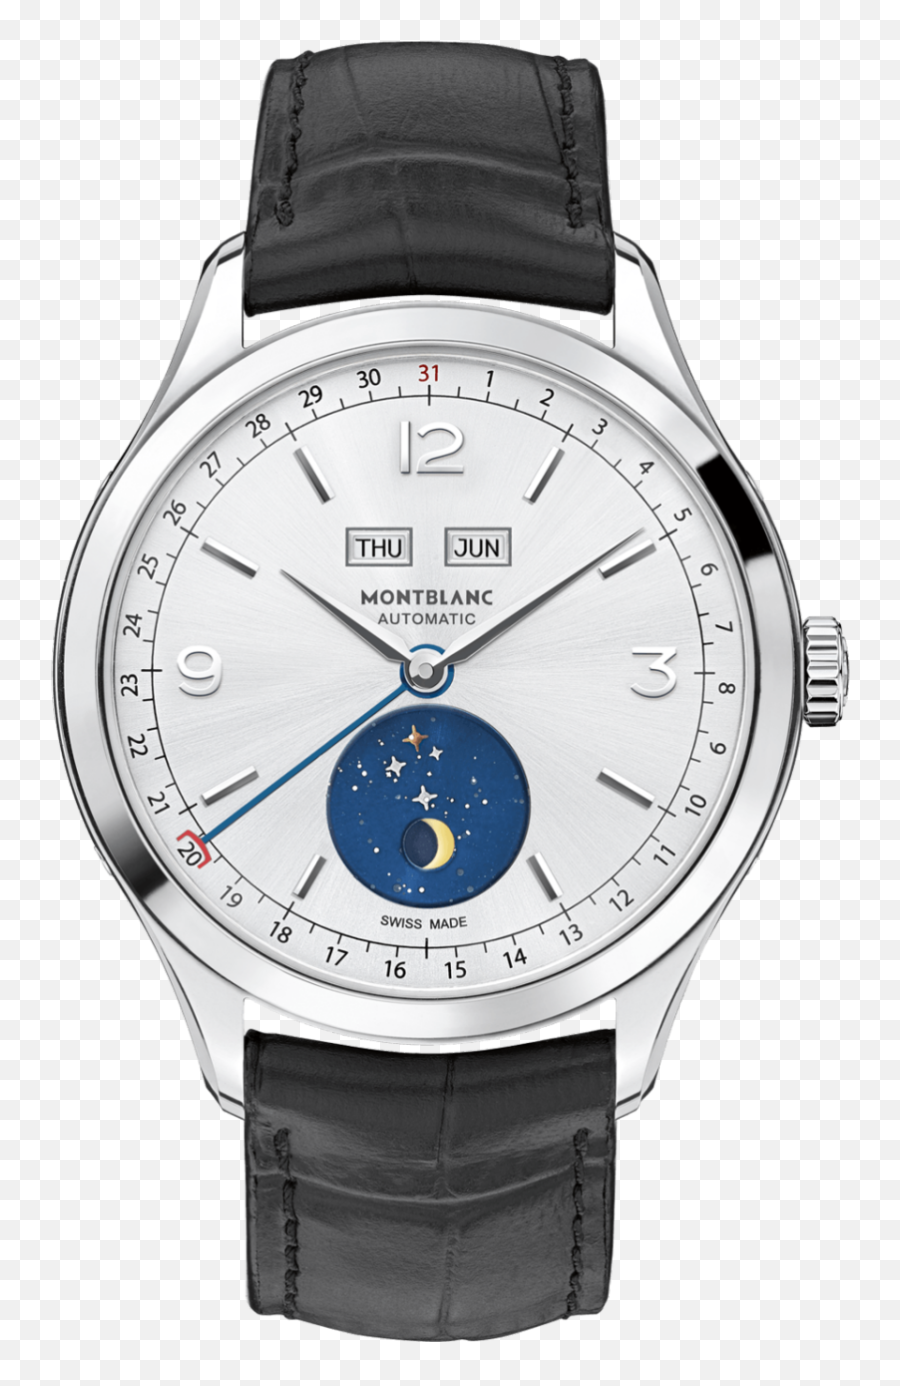 Montblanc Or Omega - Watch Discussion Forum The Watch Forum Montblanc Heritage Chronométrie Quantième Complet Emoji,Guess The Emoji 112